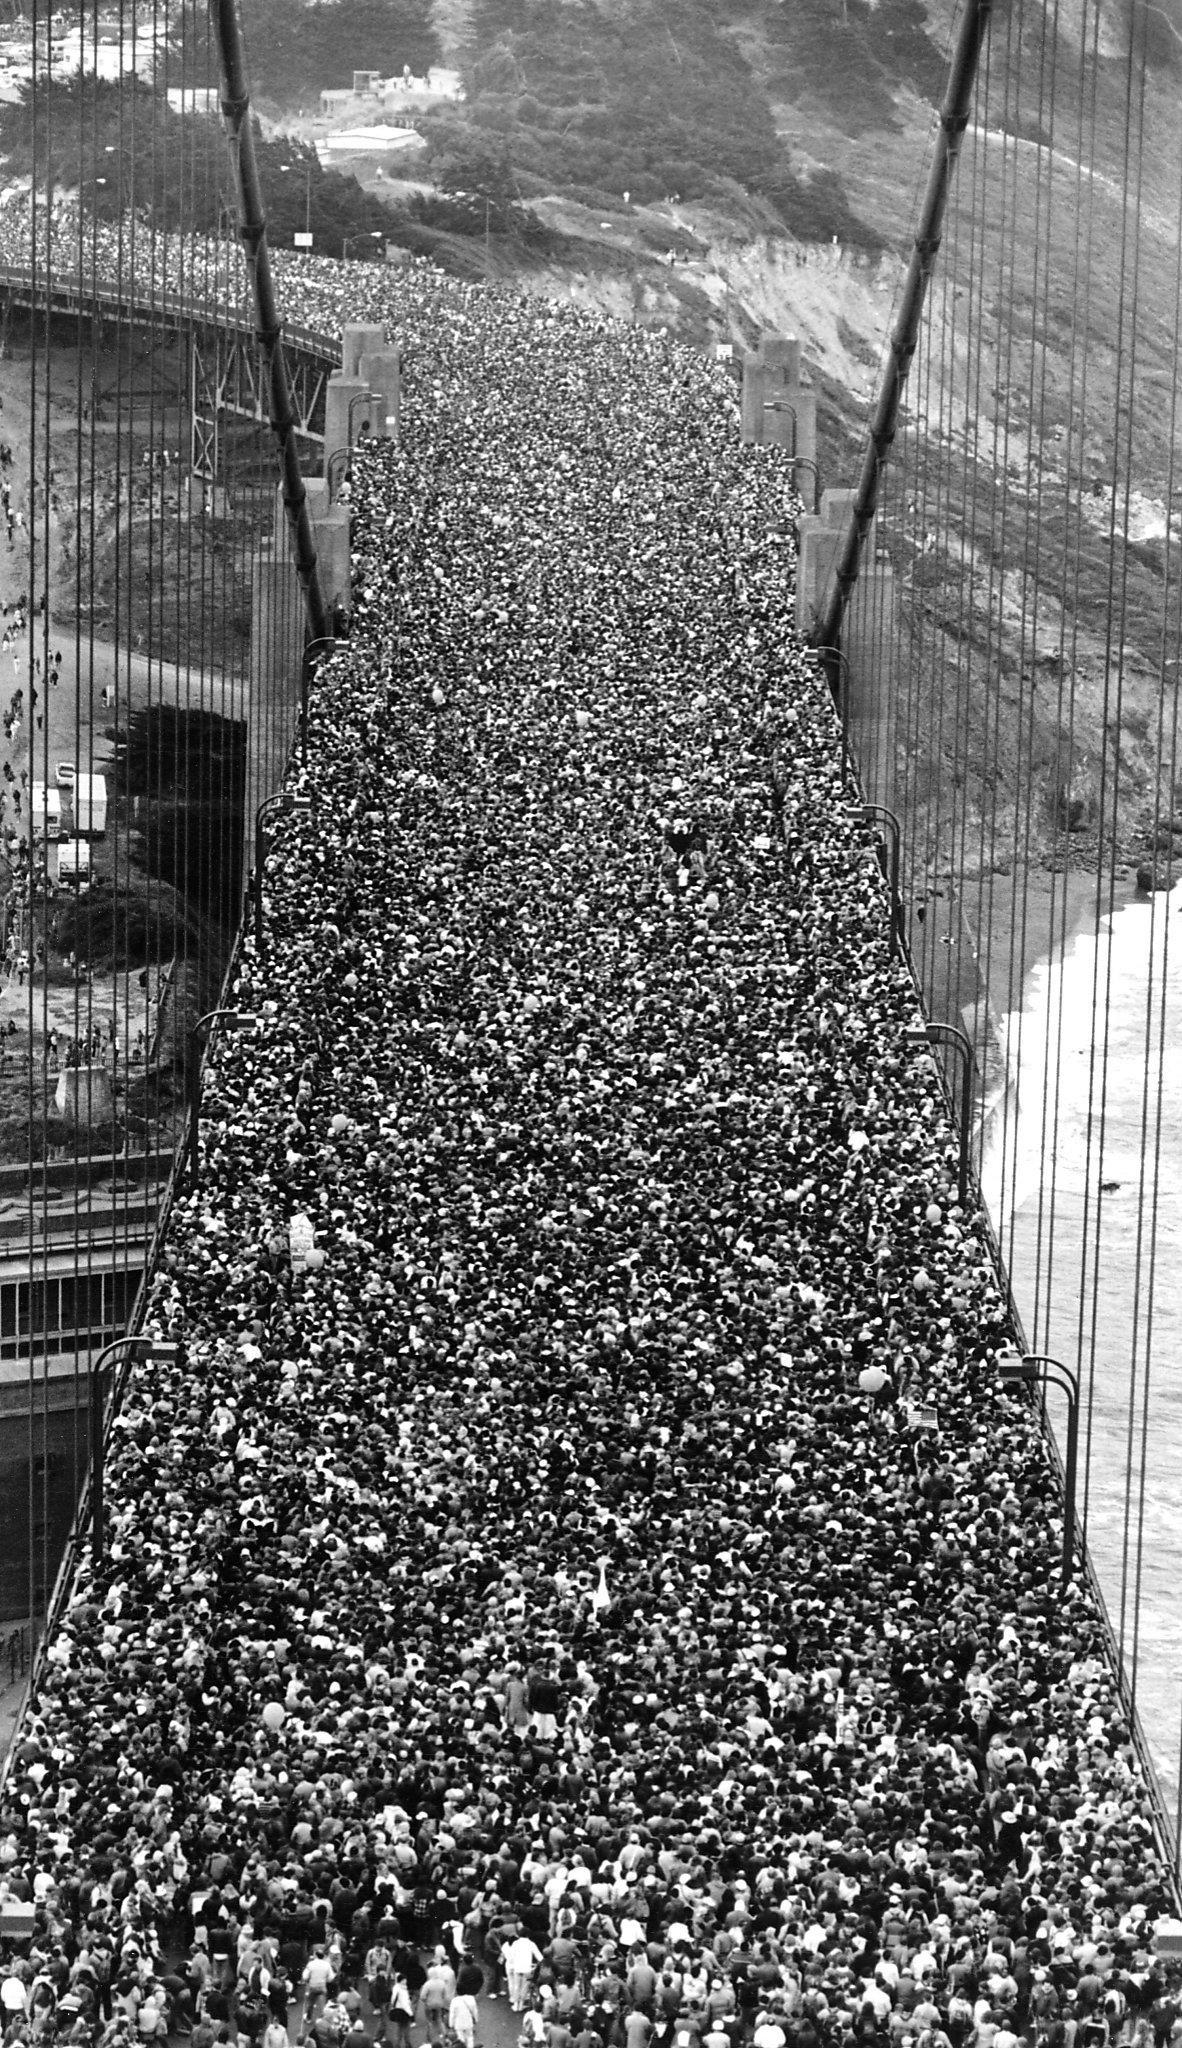 32 years ago, 300,000 people flattened the Golden Gate Bridge